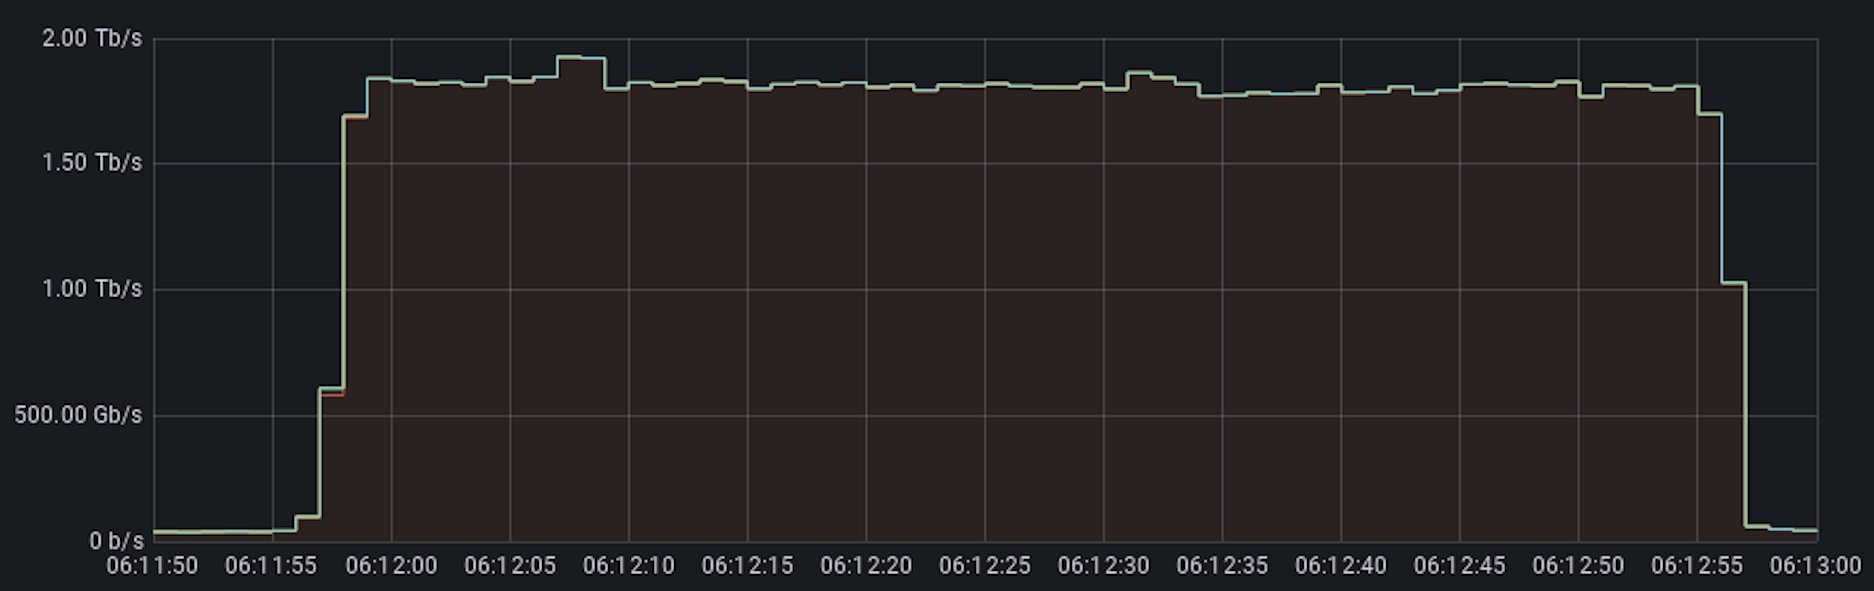 DDoS attack peaking just below 2 Tbps